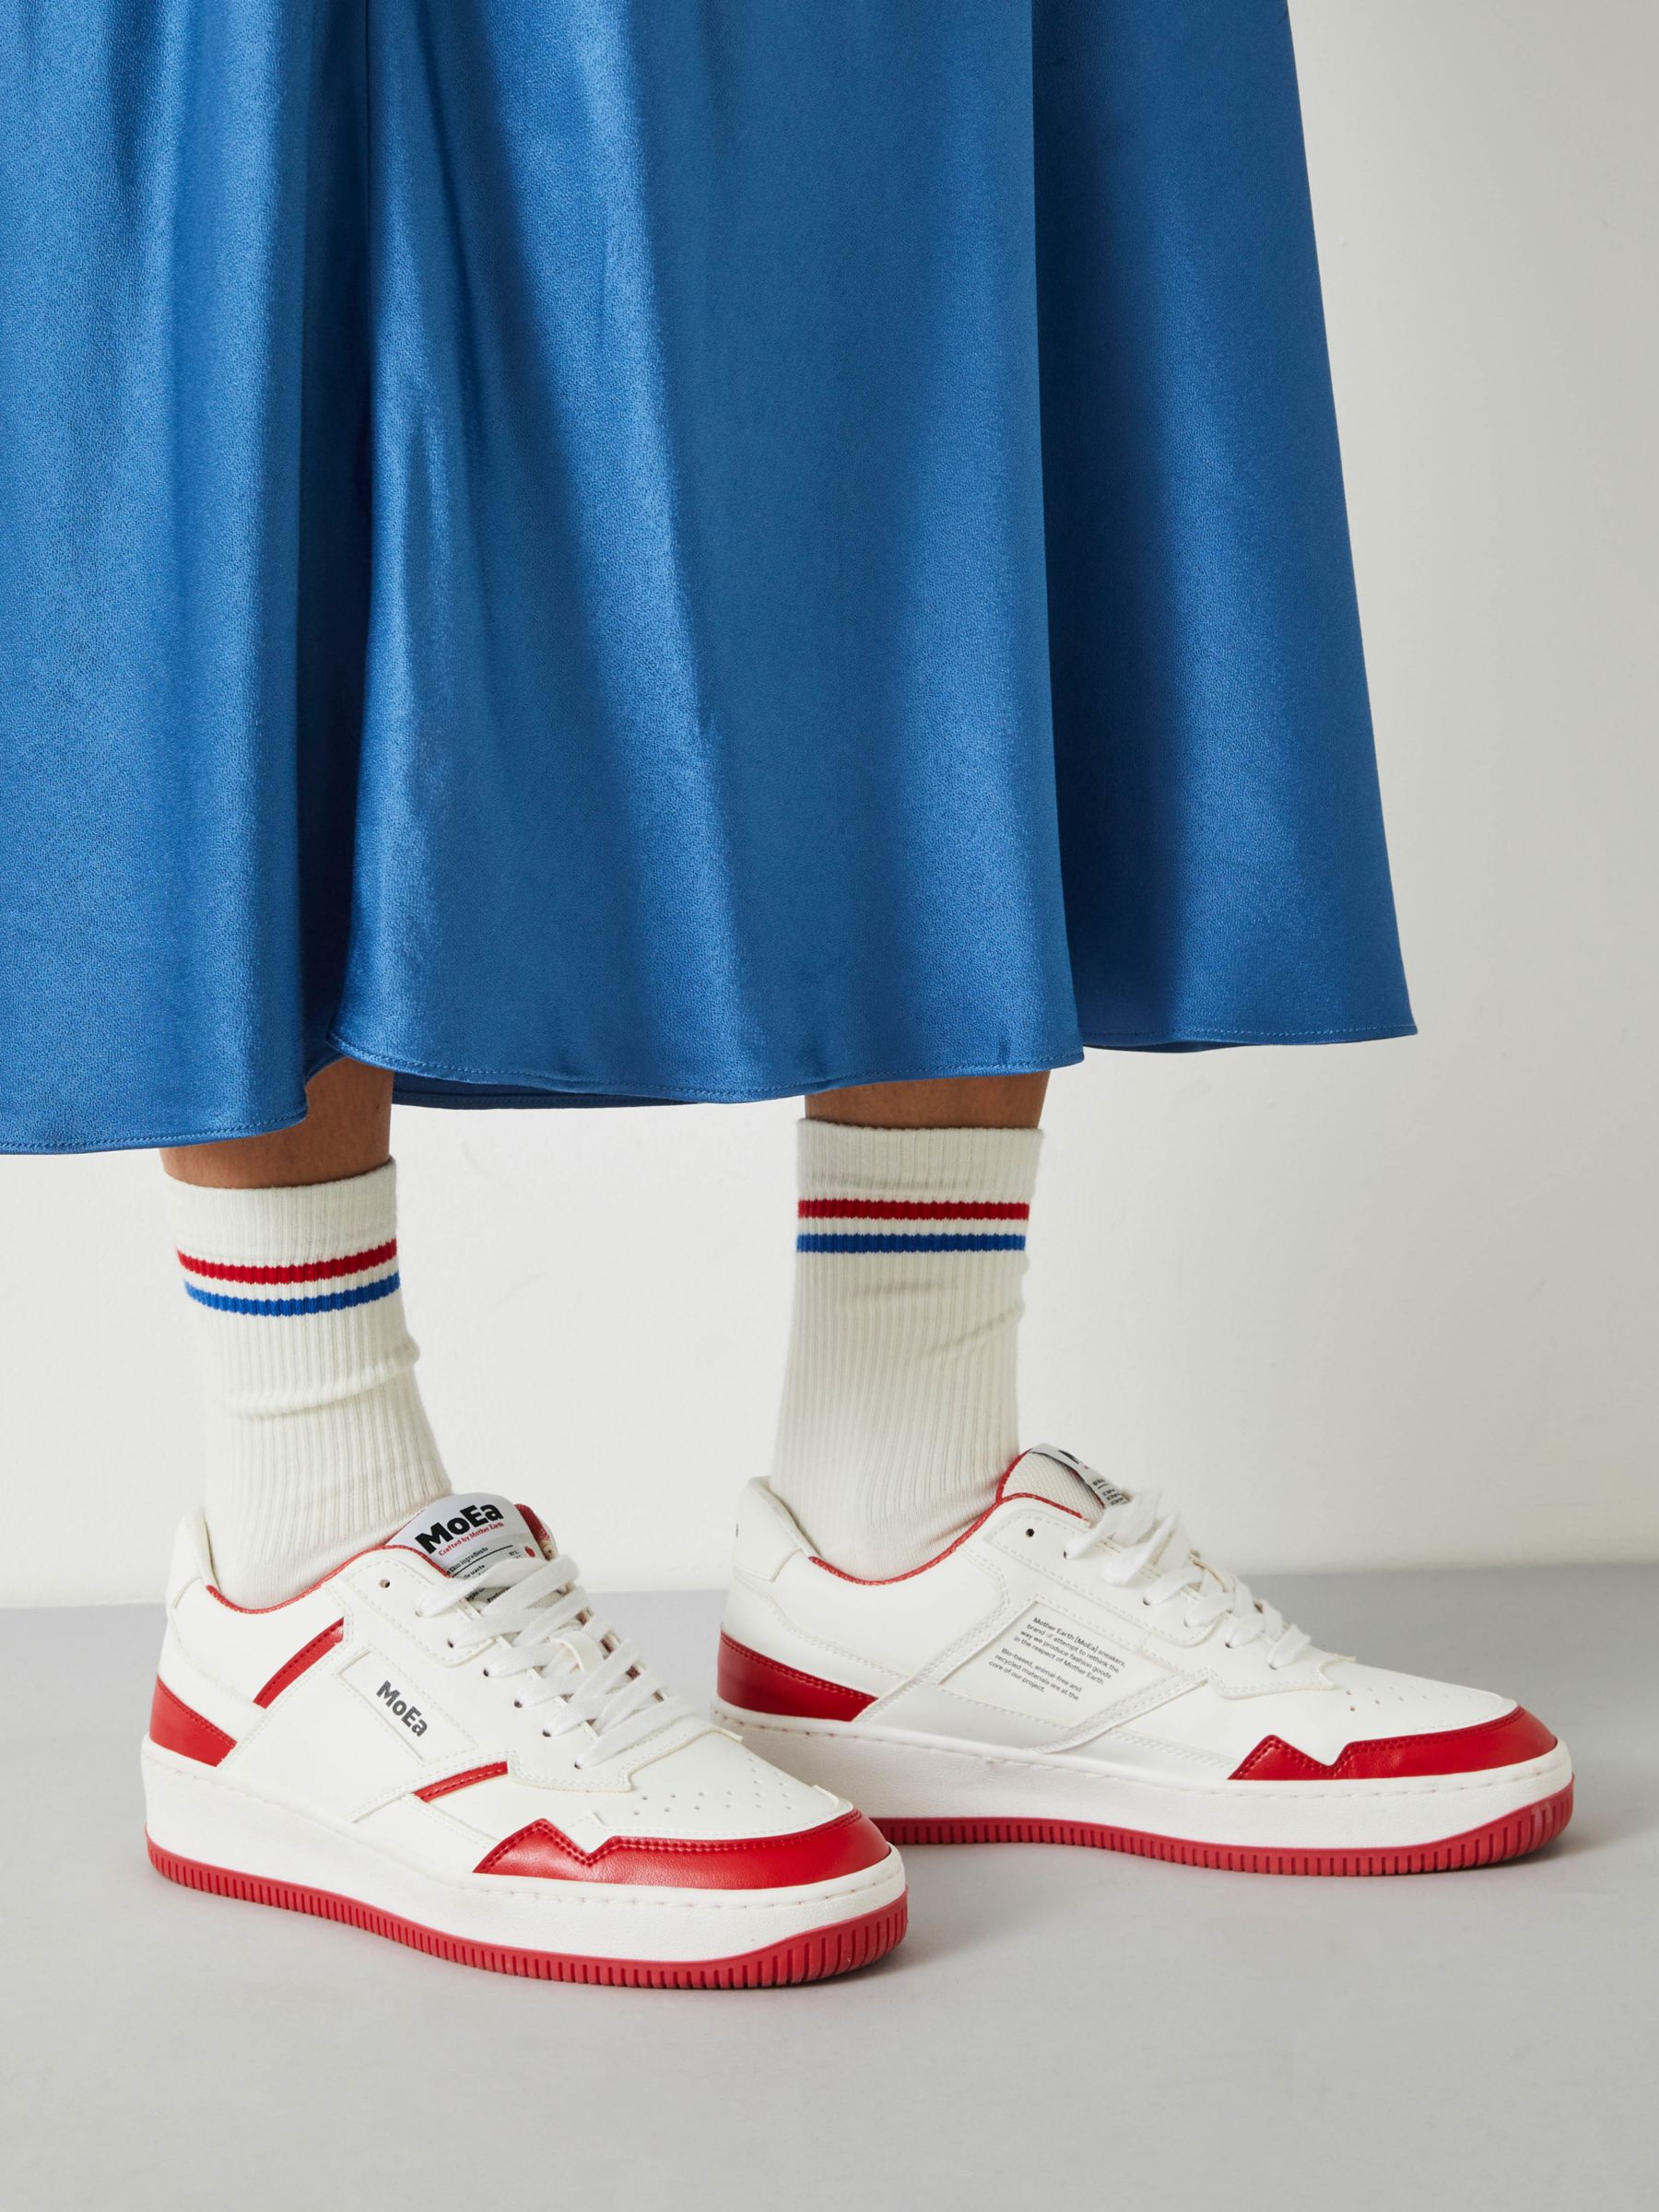 HUSH Nell Stripe Sport Socks, Off White/Blue/Red, One Size